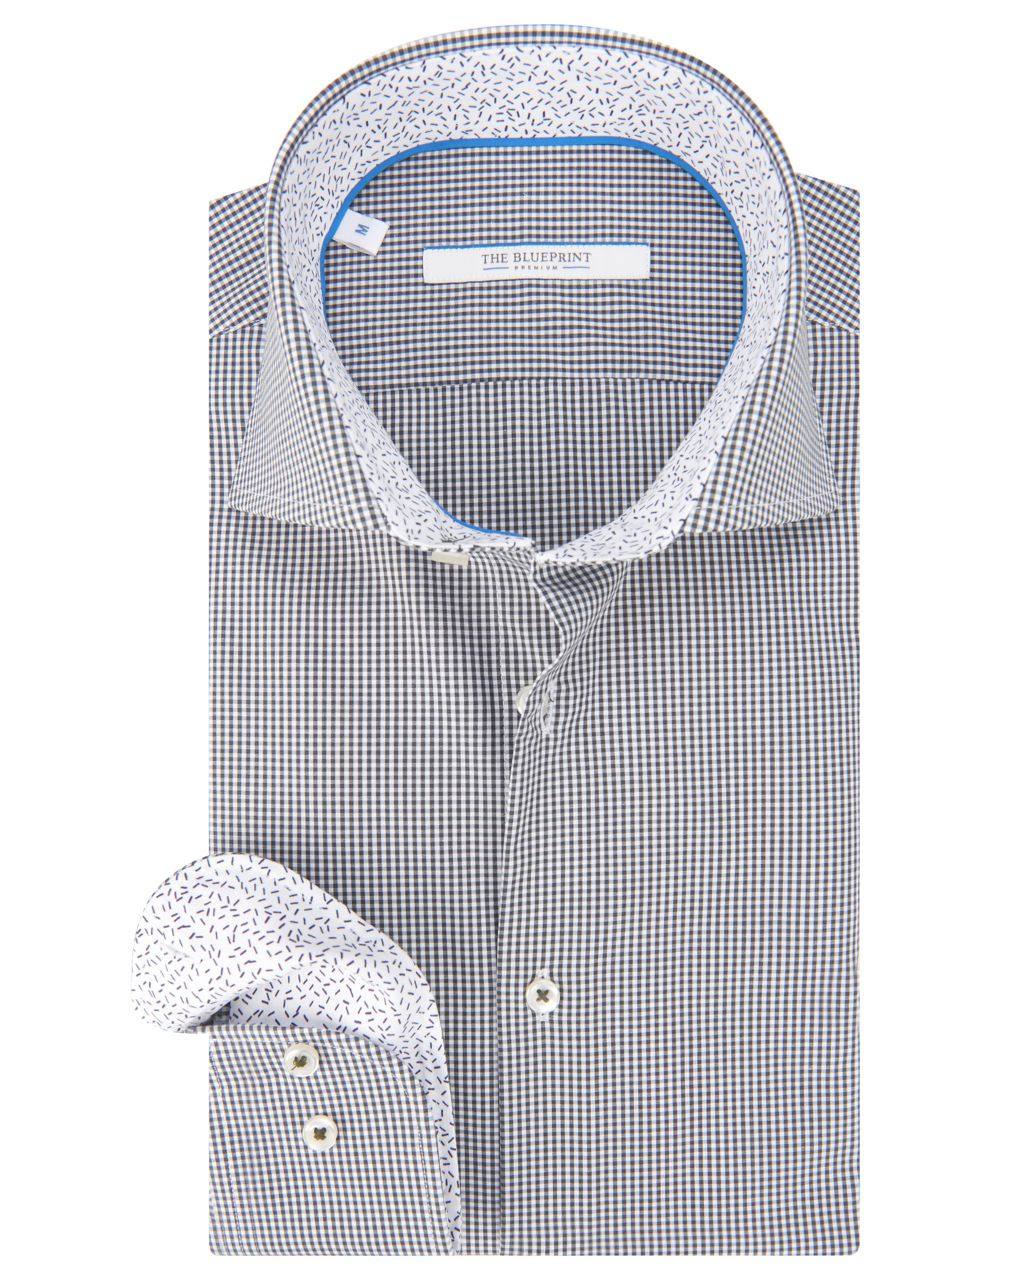 The BLUEPRINT Premium Trendy overhemd LM Donkergroen kleine ruit 064750-001-L